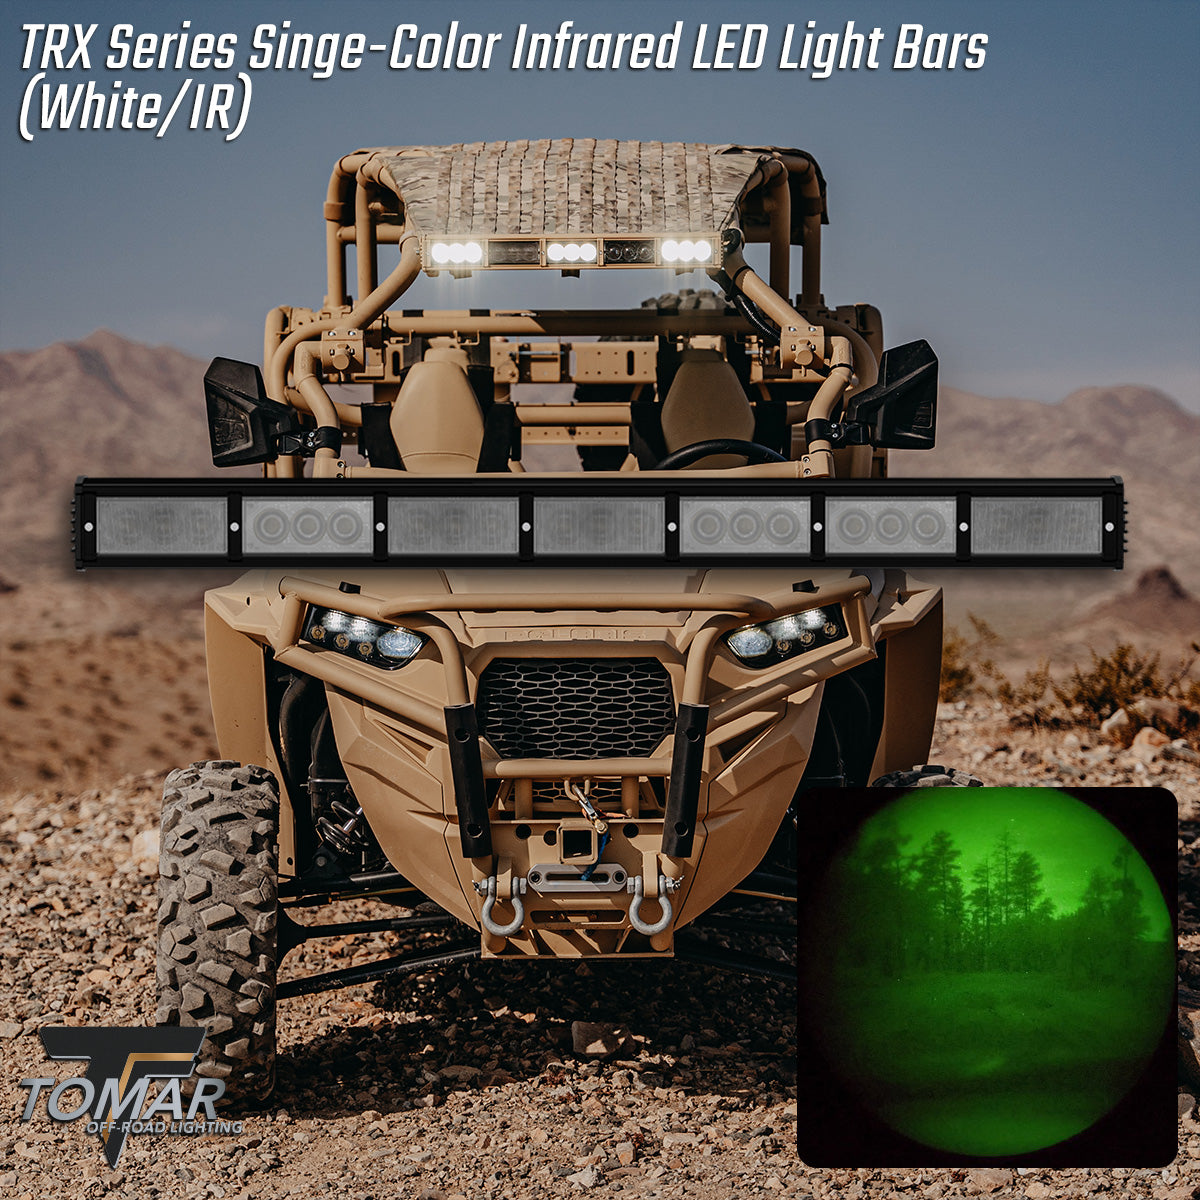 TOMAR Off Road 15 TRX Series Off-Road LED Light Bar